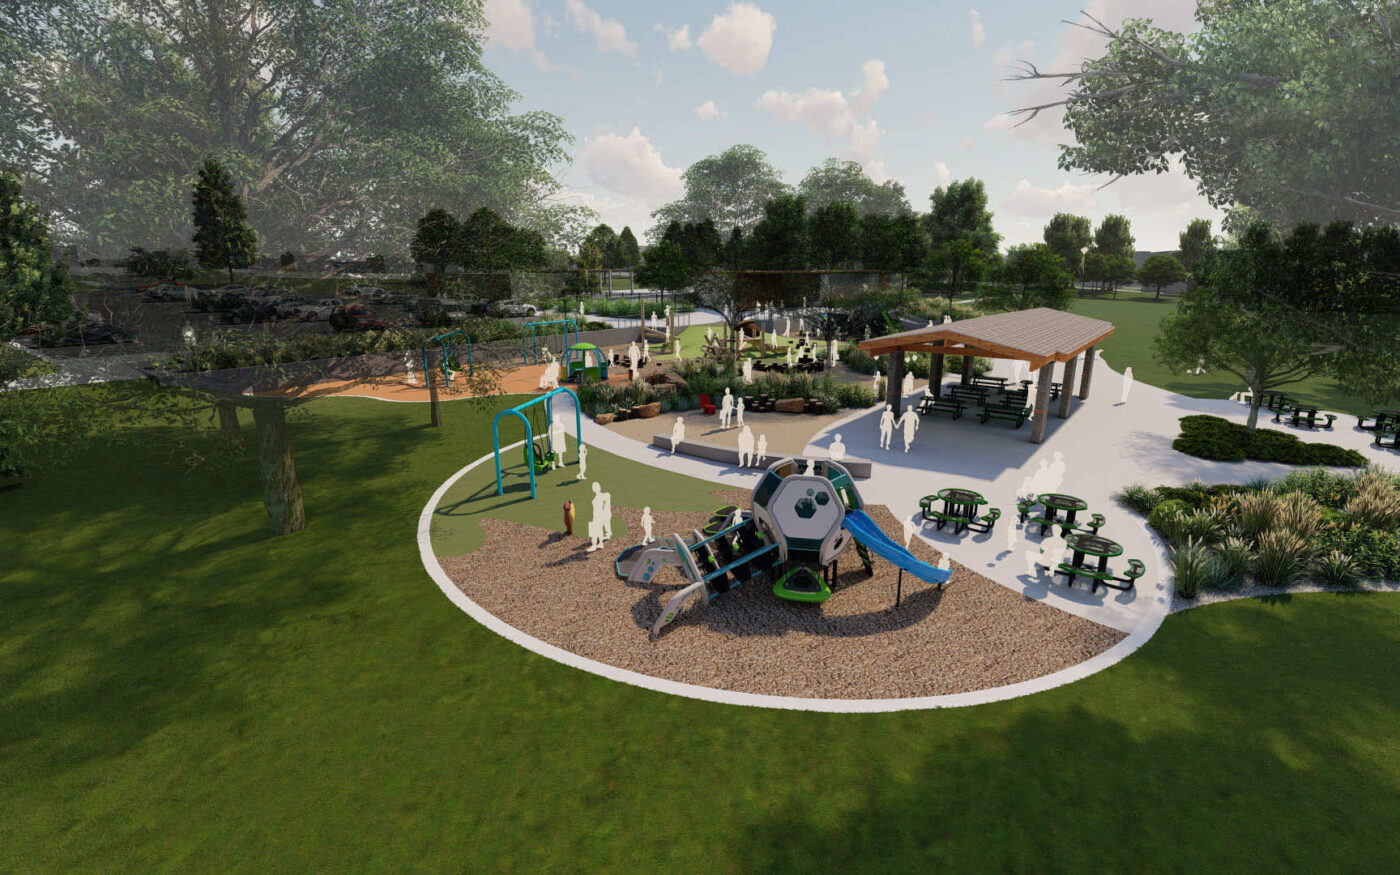 Congress Park: Playground and Walks